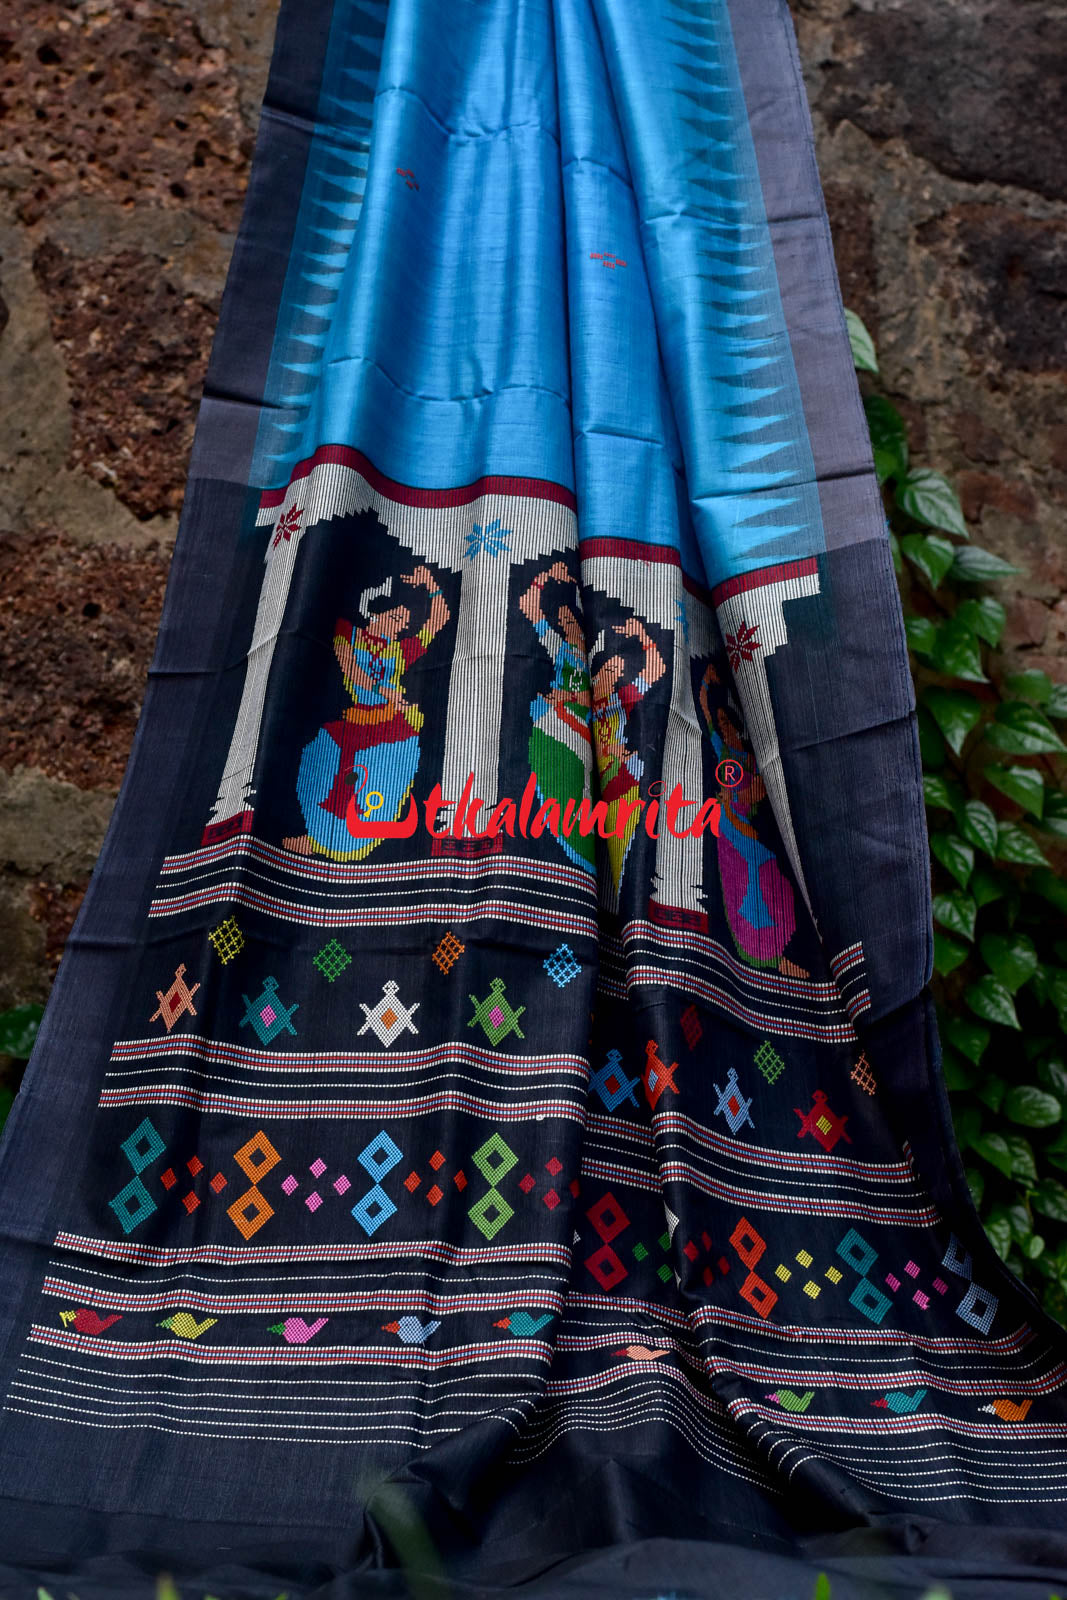 Blue Black Odissi Dancers Fine Gopalpur Tussar Saree